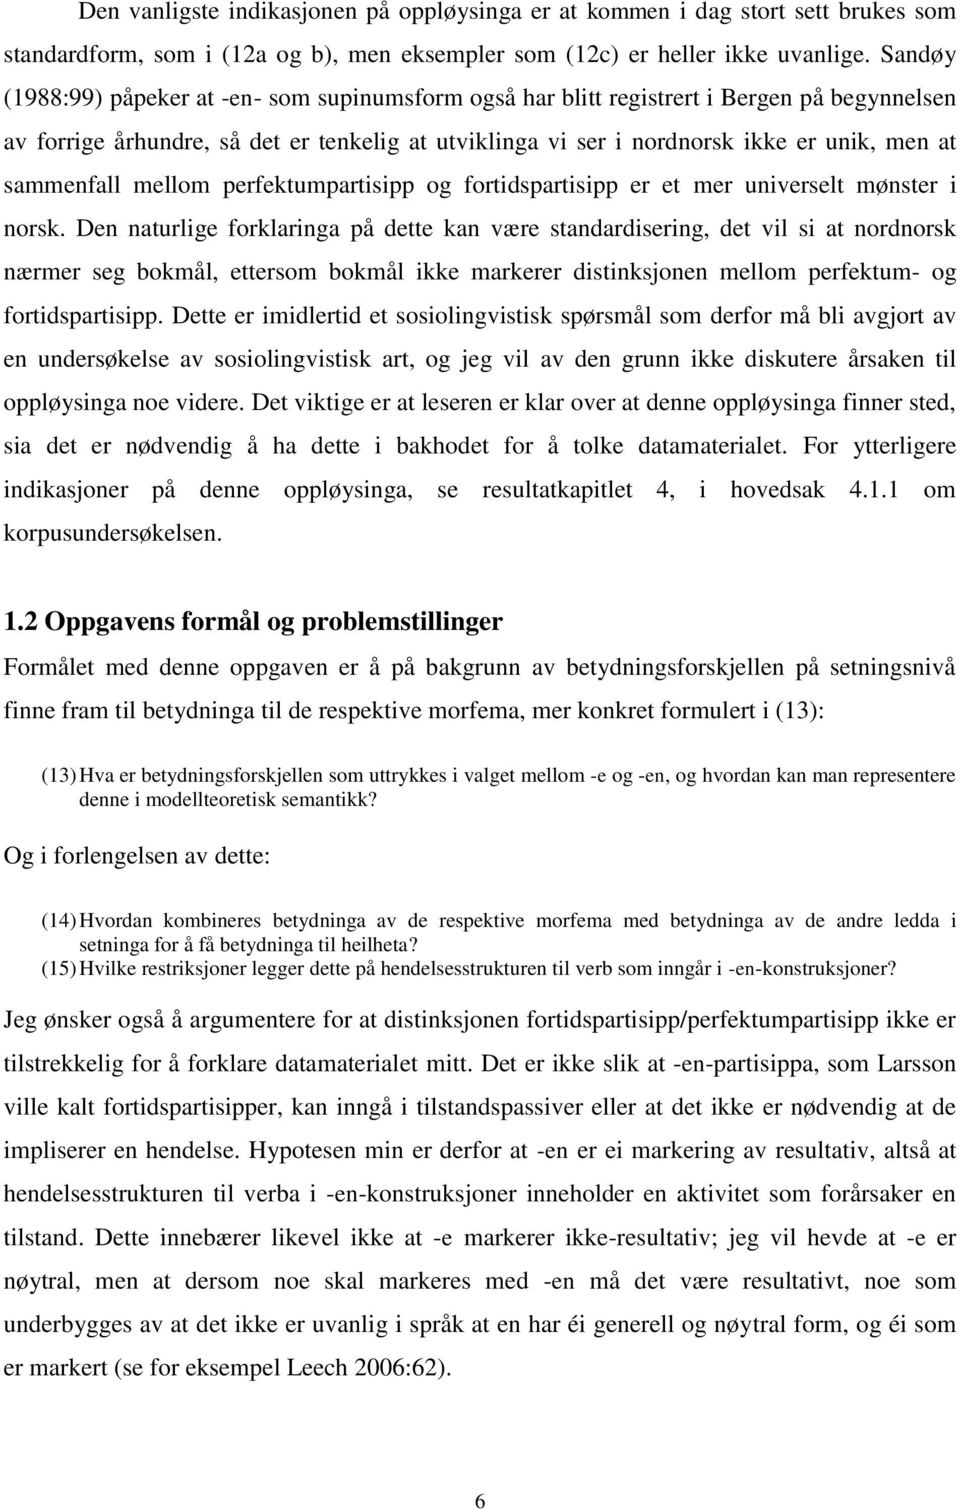 sammenfall mellom perfektumpartisipp og fortidspartisipp er et mer universelt mønster i norsk.